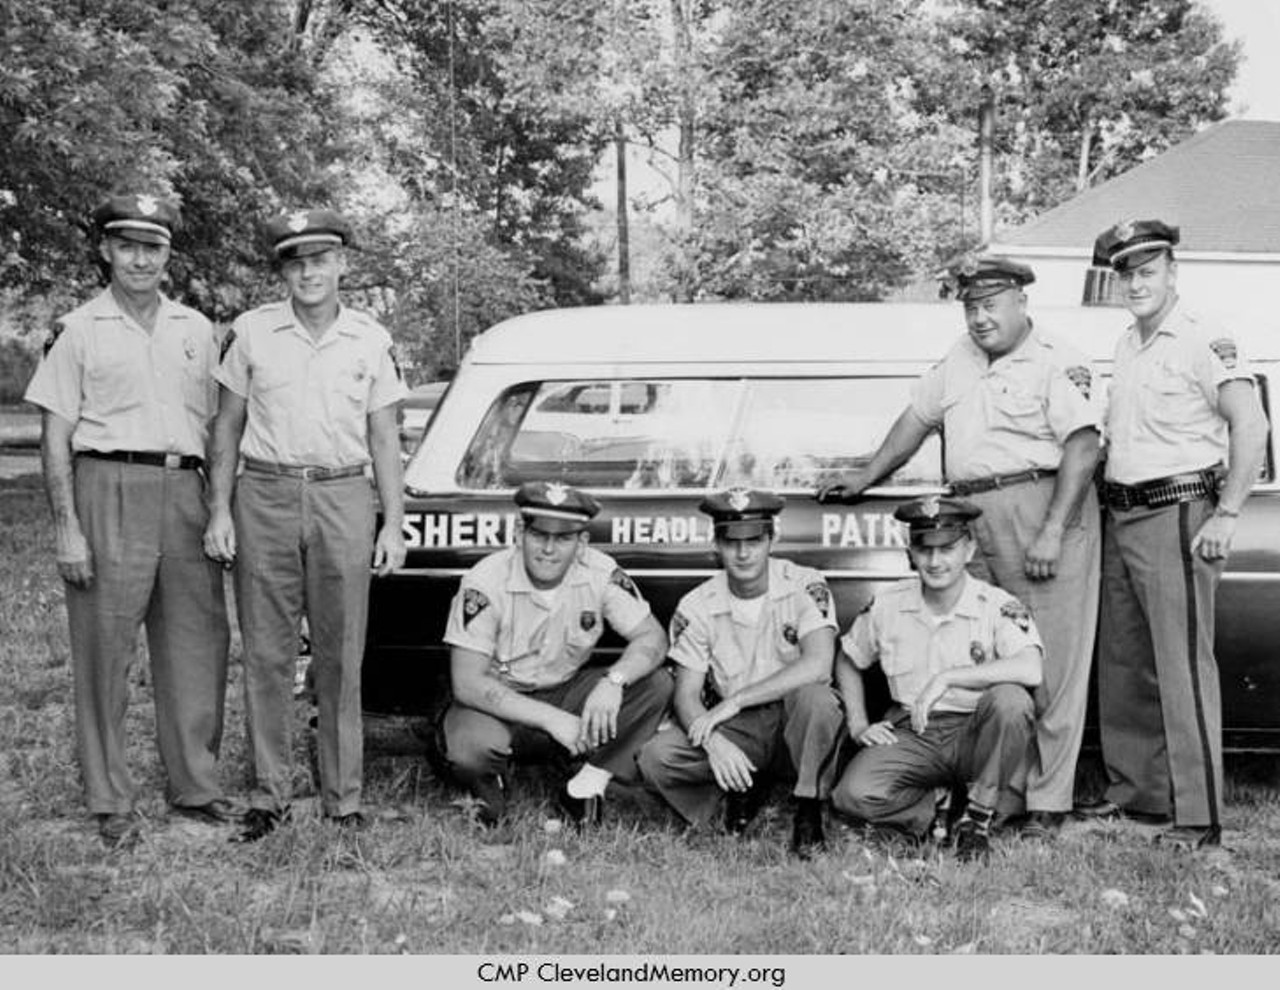  Beach Sheriff Patrol, 1959 